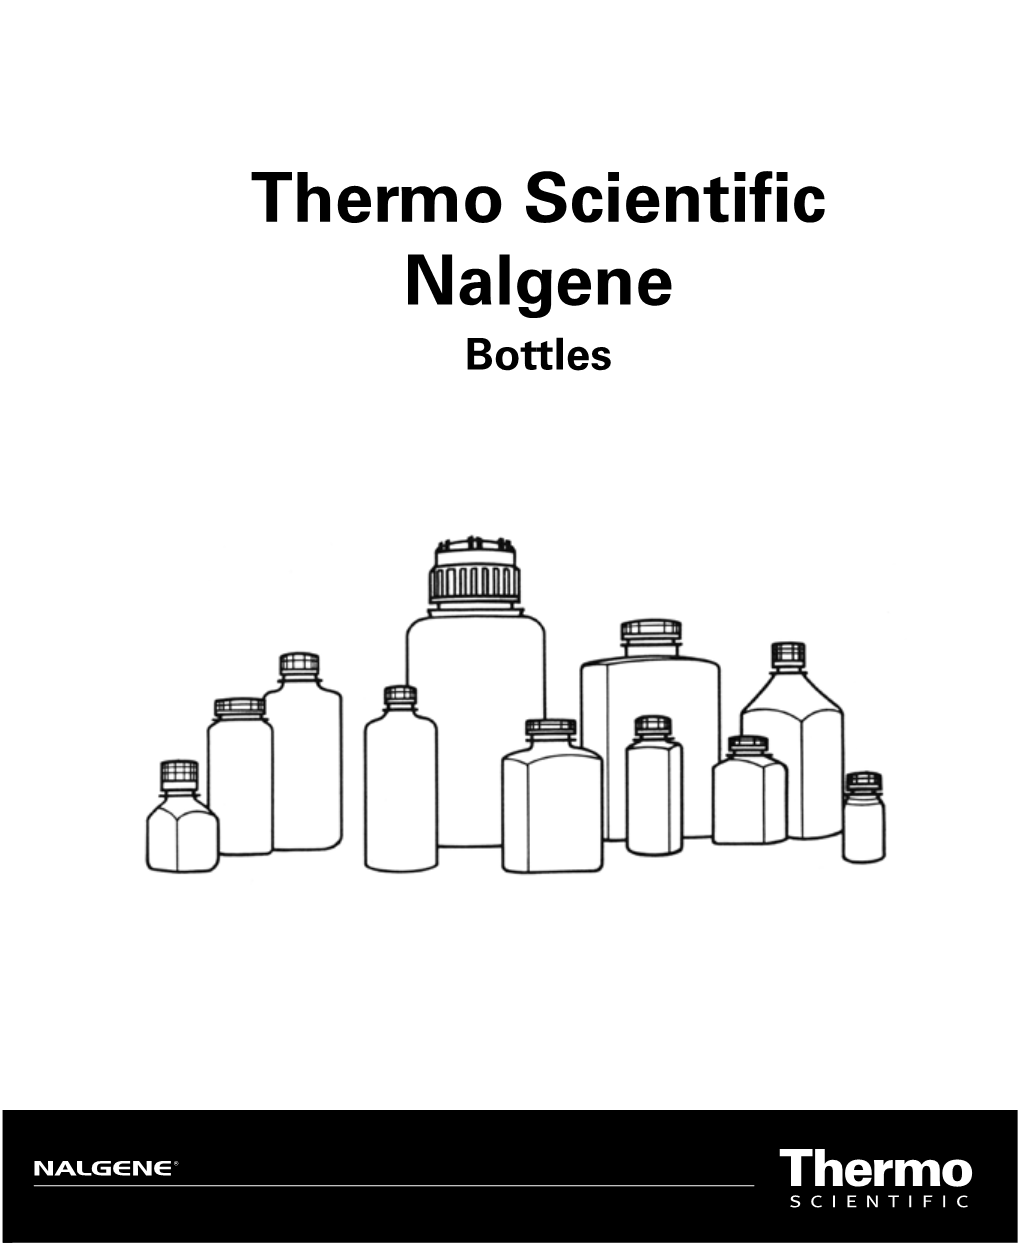 Thermo Scientific Nalgene Bottles